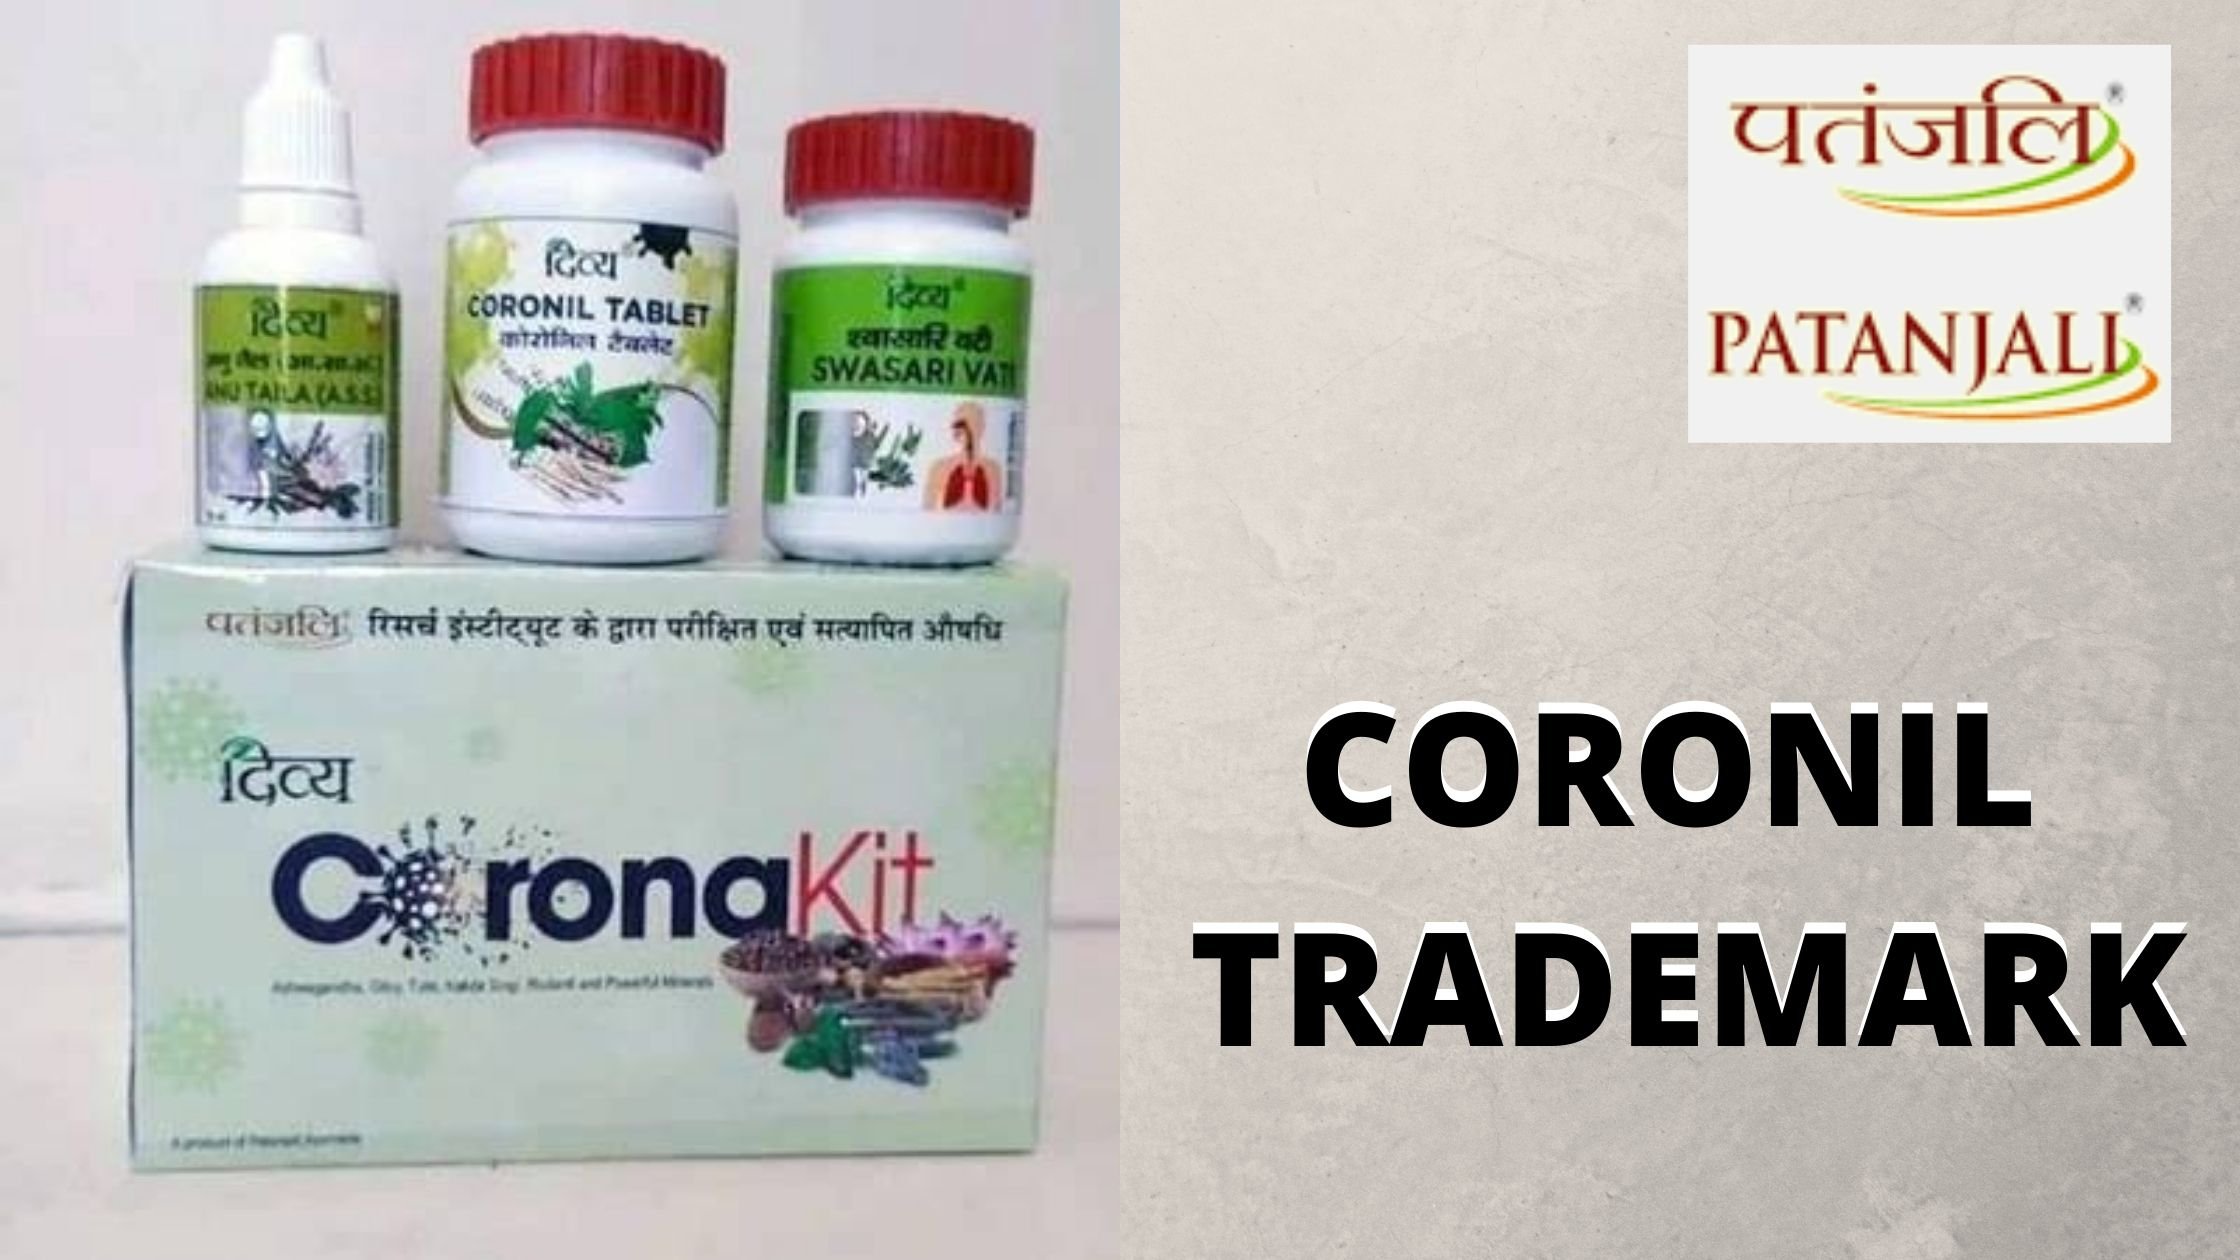 The Case of ‘Coronil’ Trademark